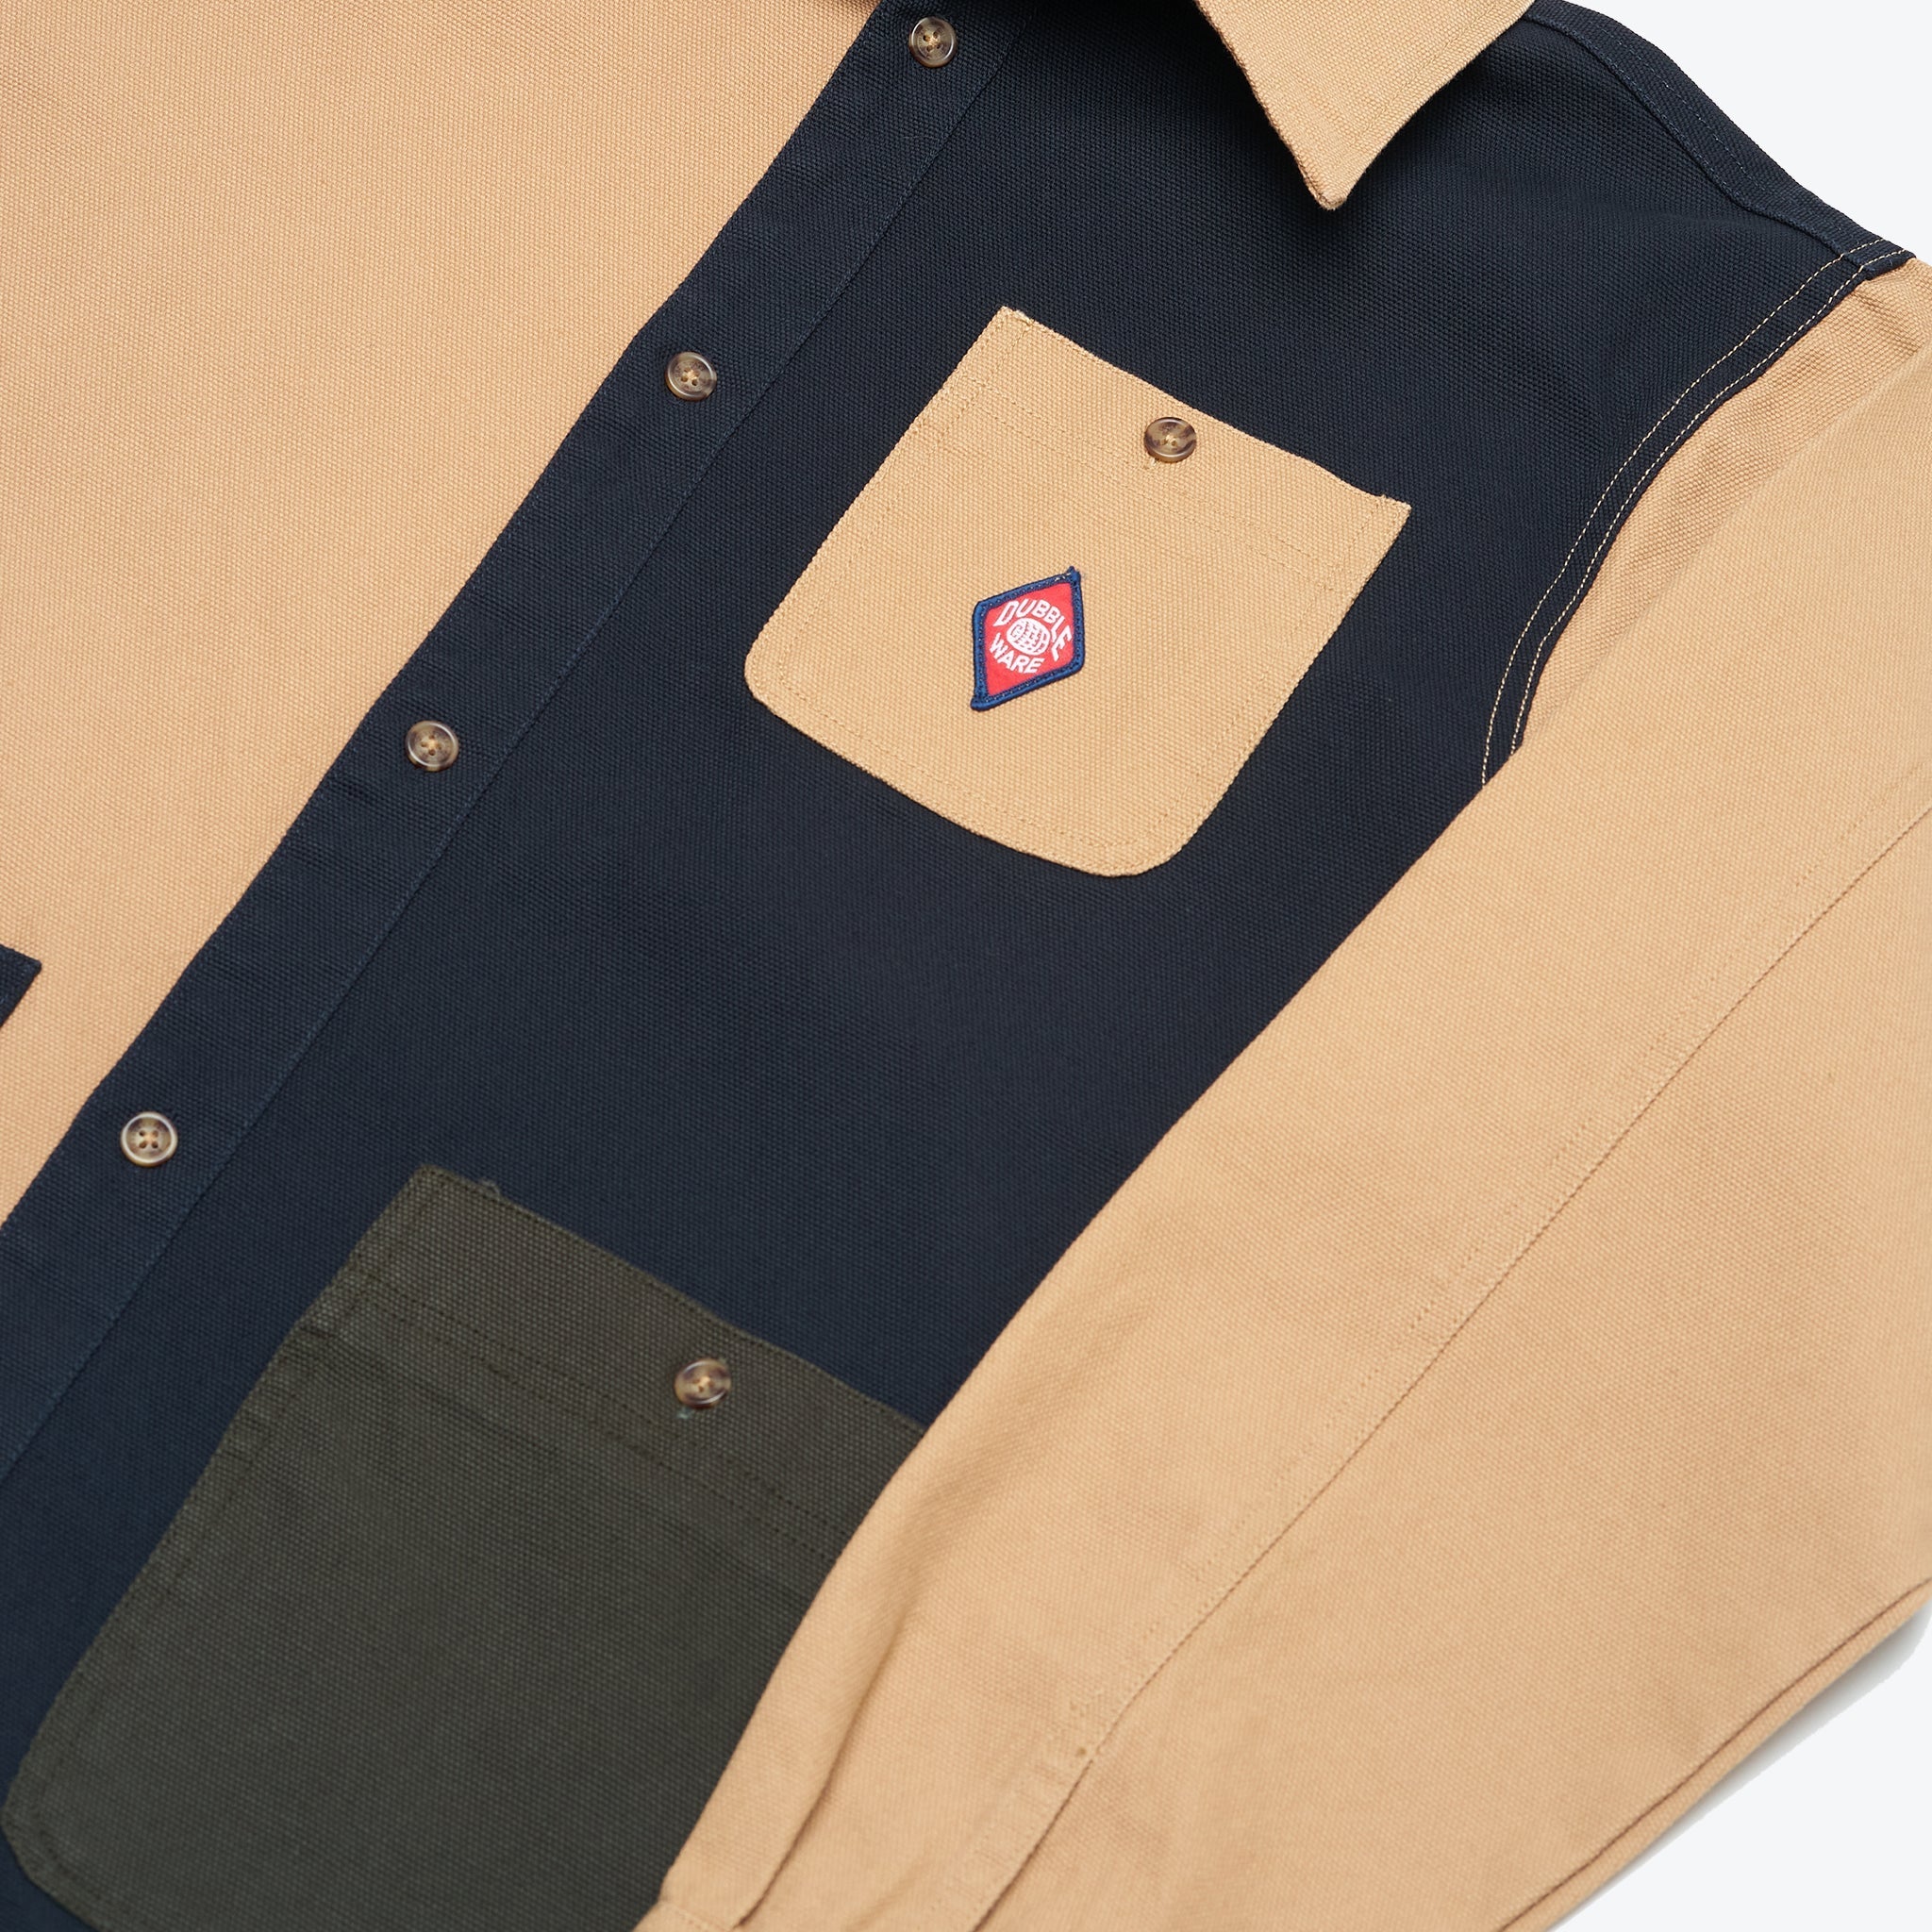 Contrast Work Shirt Jacket - Tan / Navy / Green